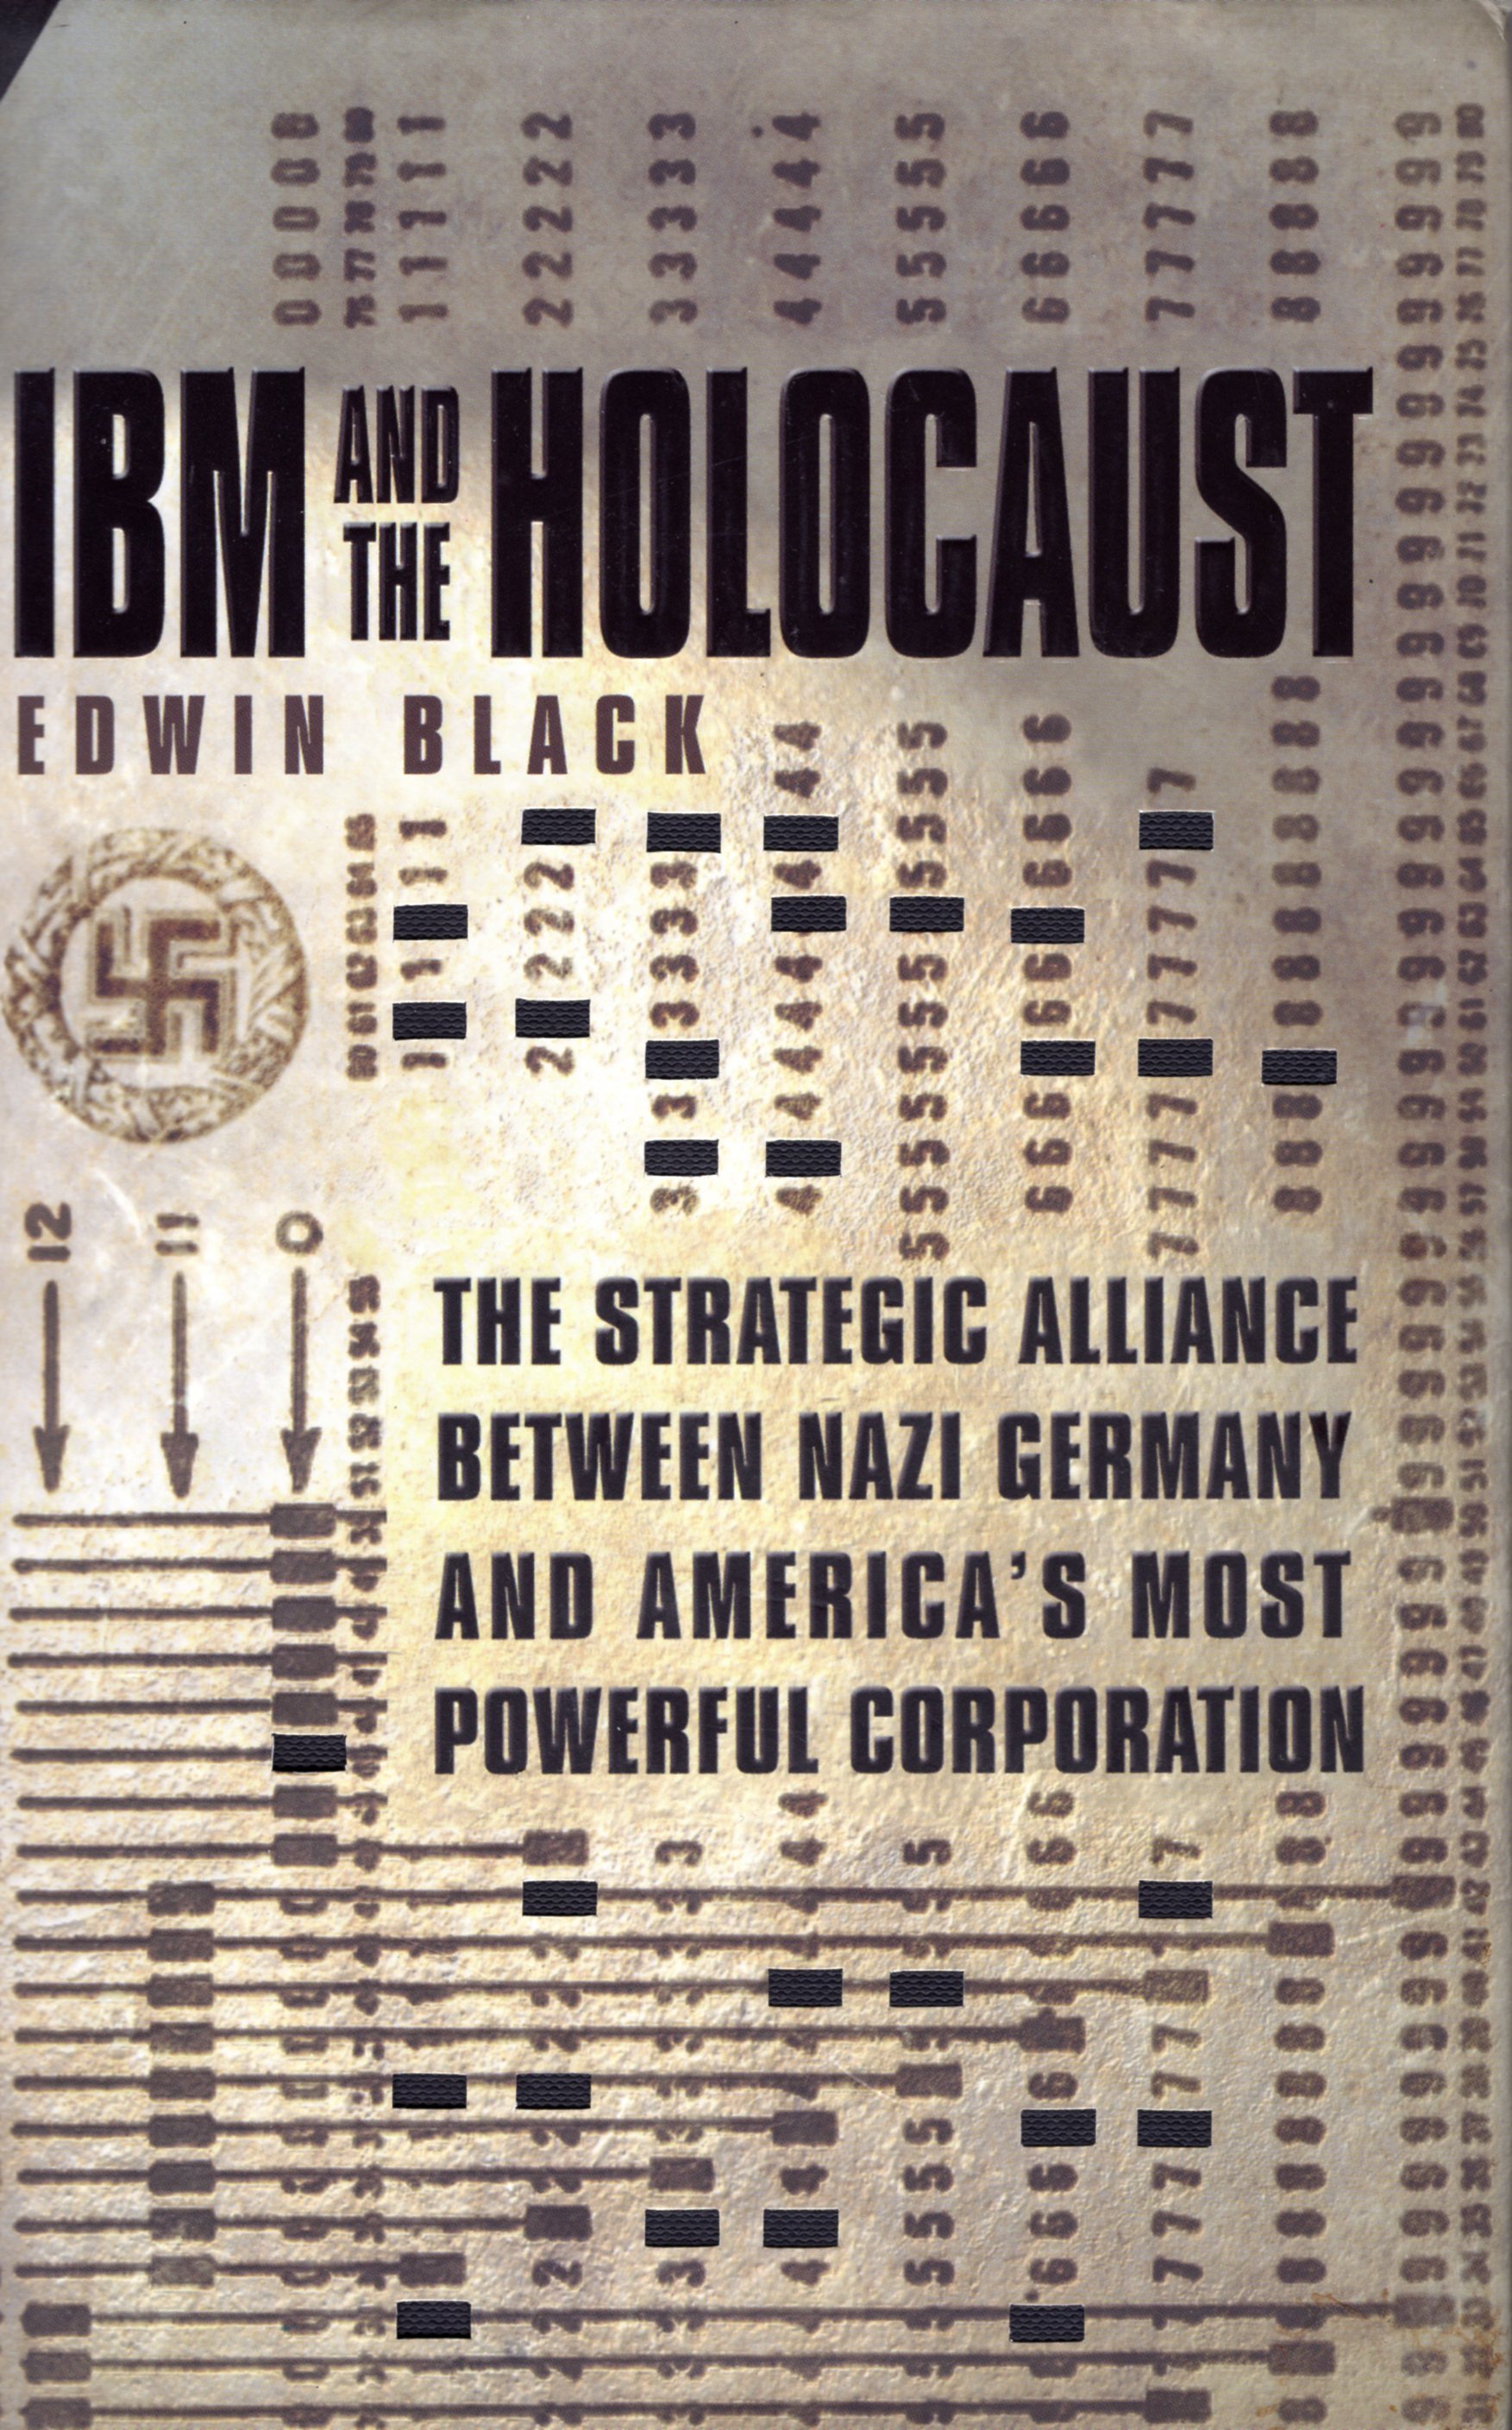 IBM and the HOLOCAUST